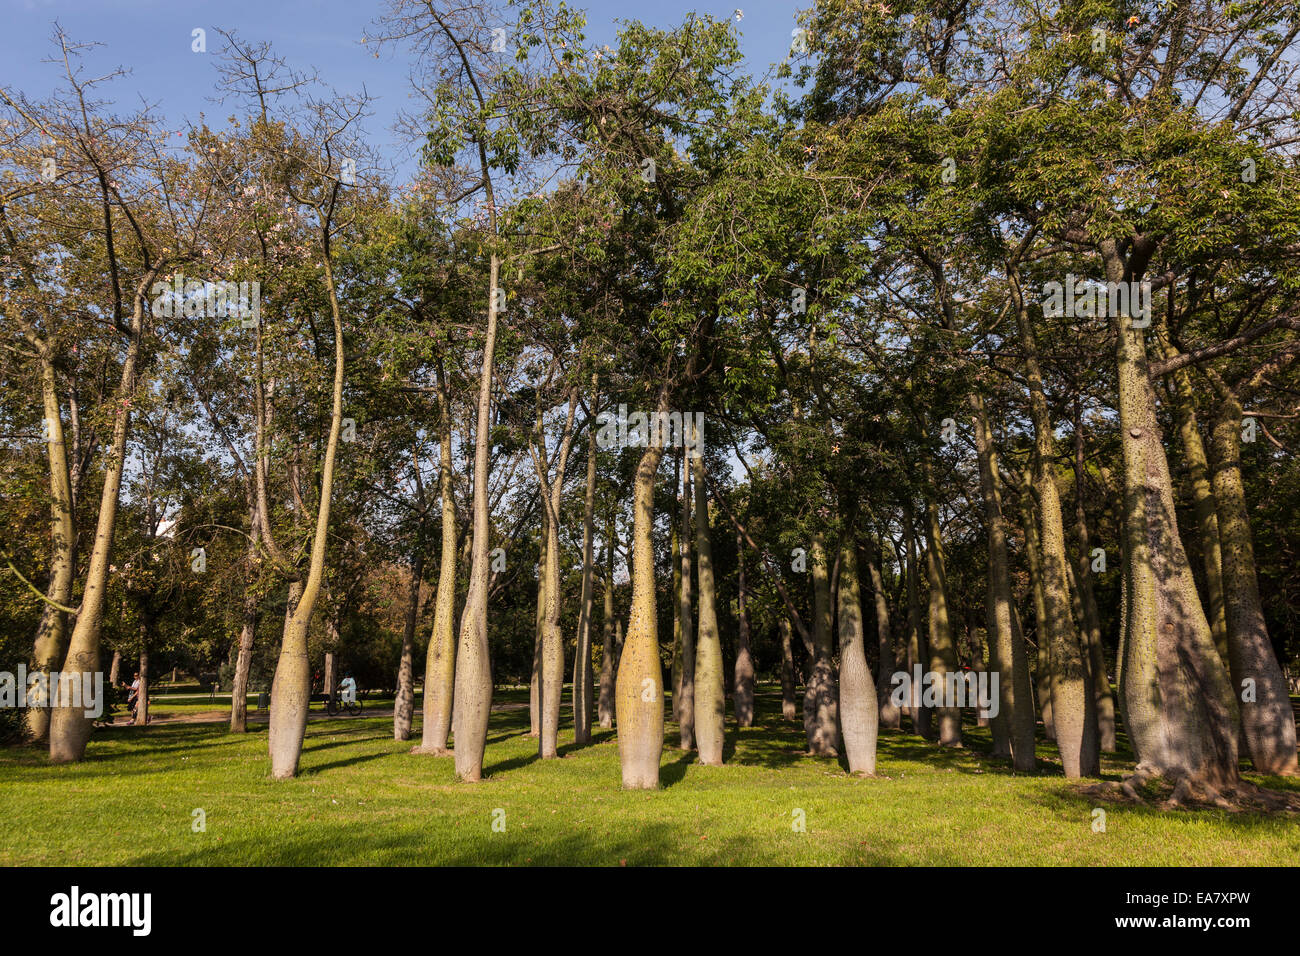 Copse of ceiba trees in the jardines de turia, Valencia, Spain. Stock Photo